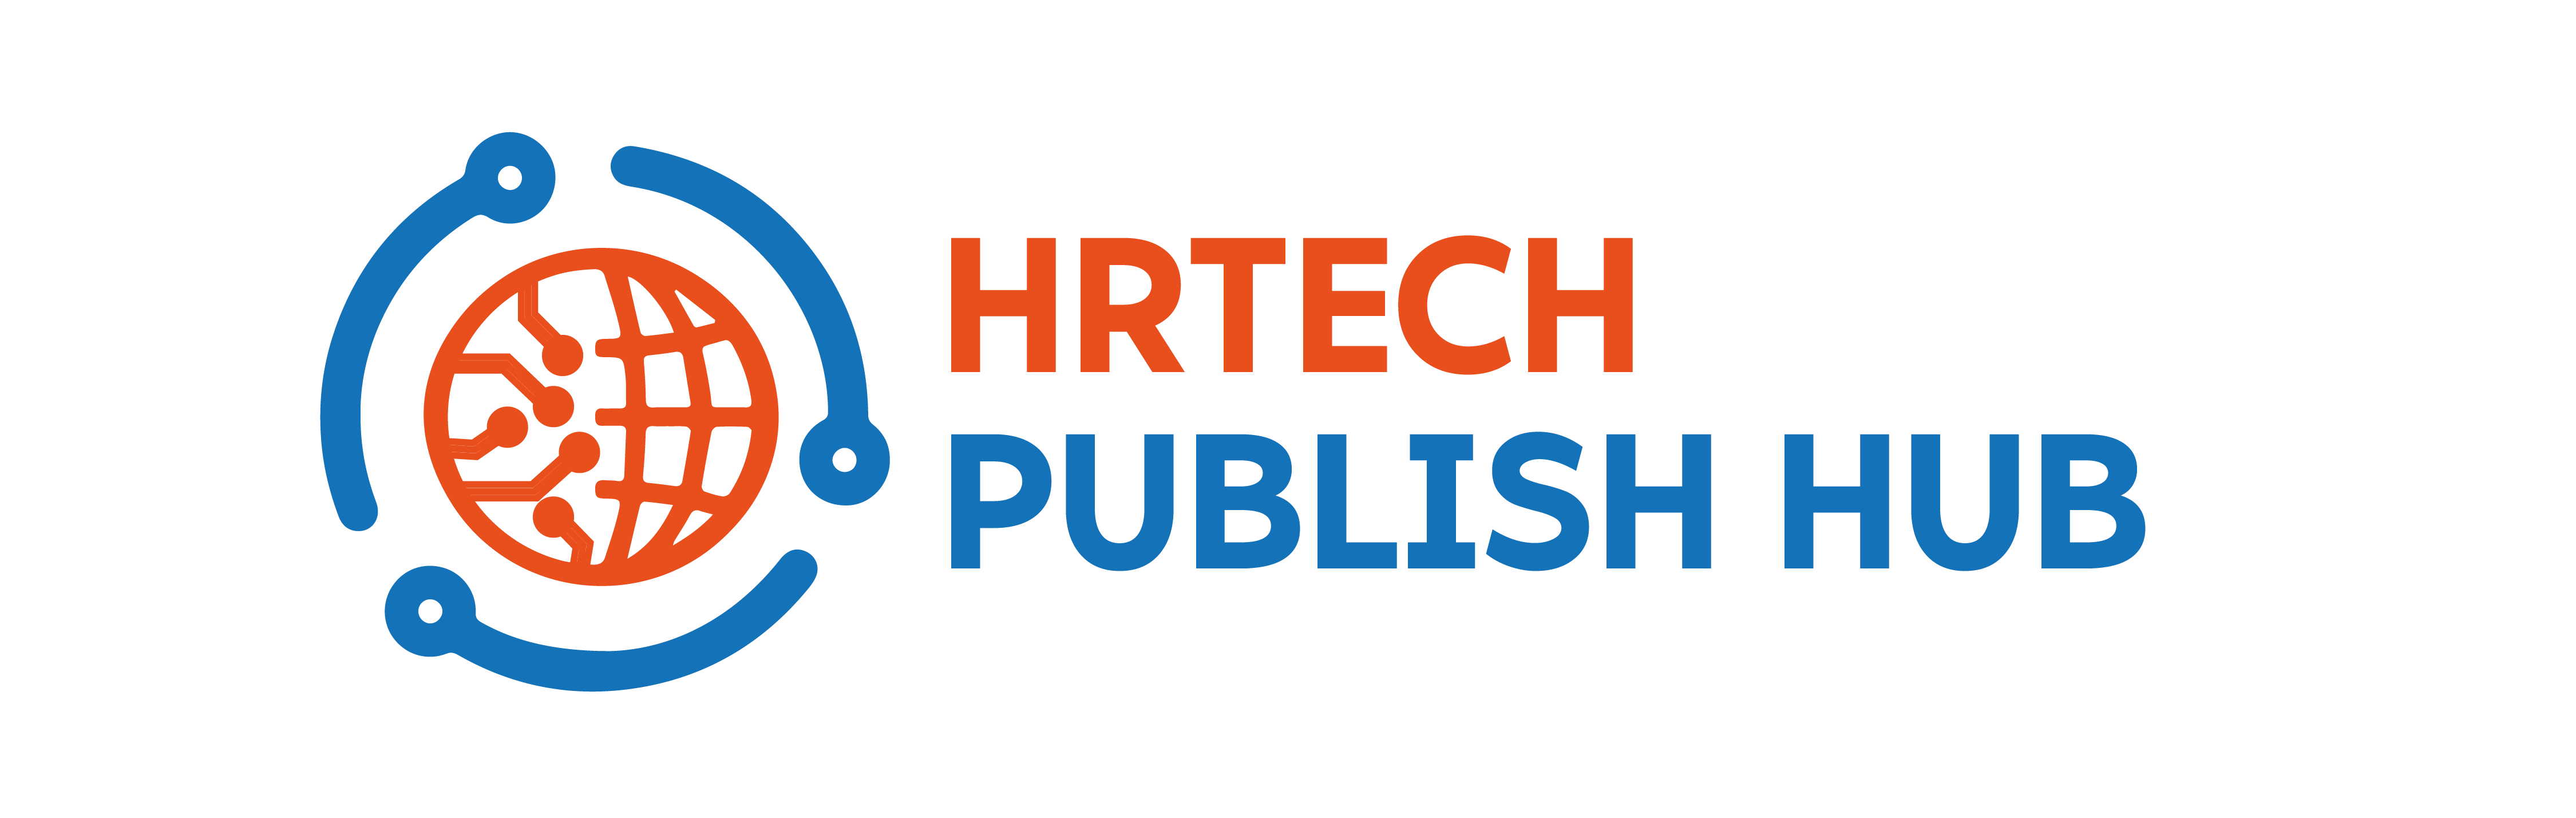 HR Tech Publish Hub